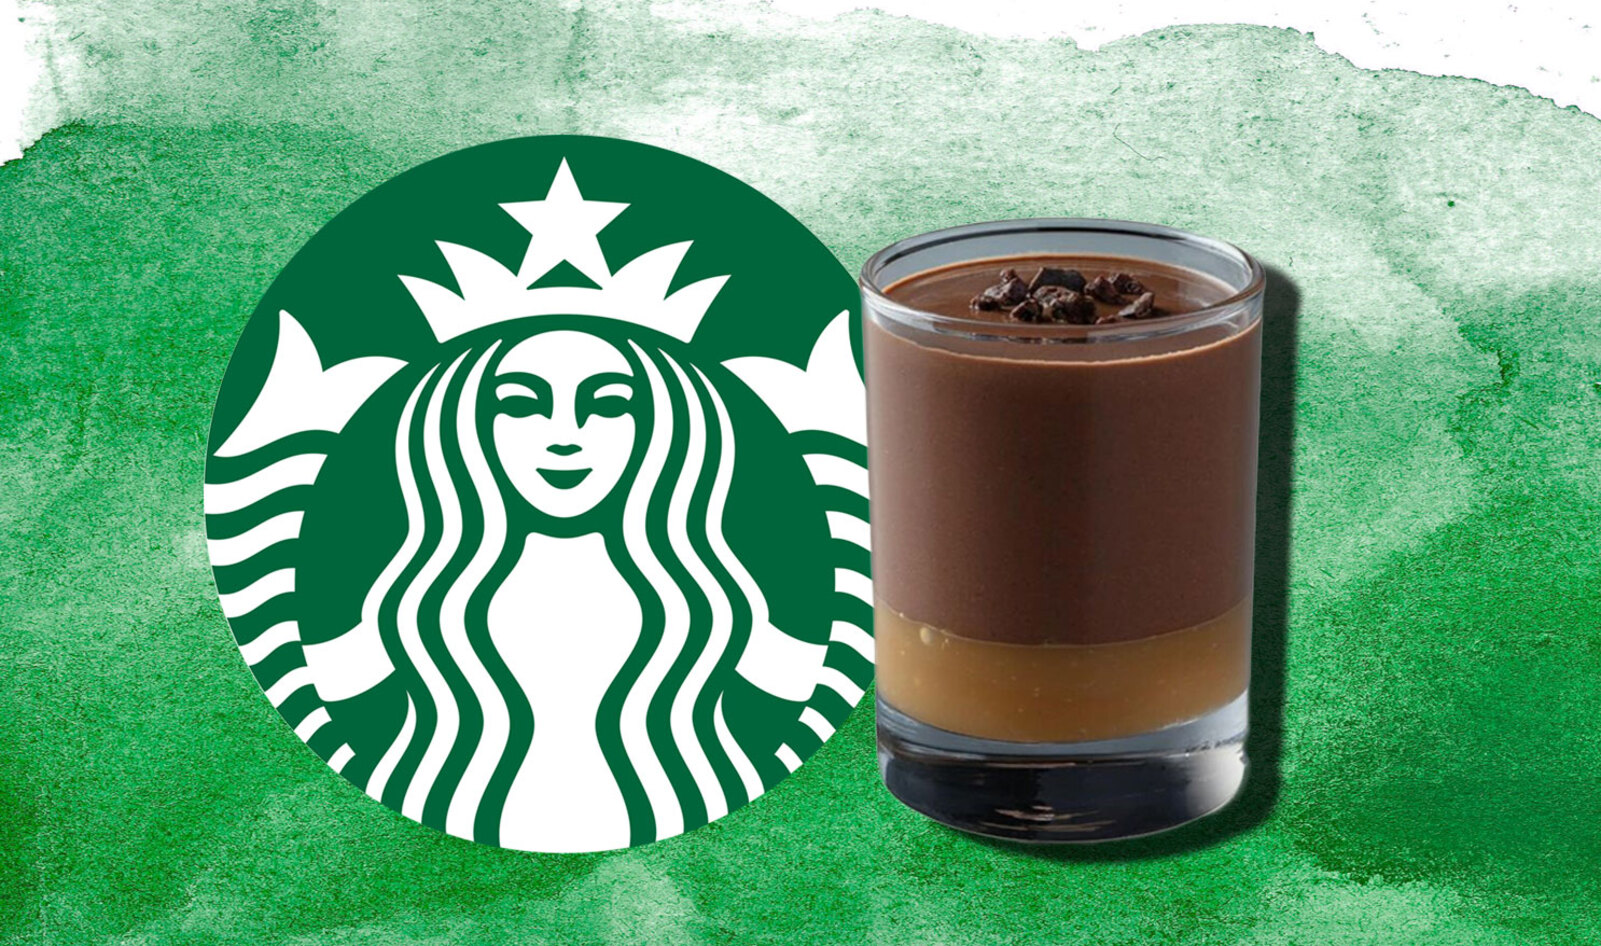 Starbucks Launches Vegan Caramel Chocolate Dessert Pots in UK&nbsp;